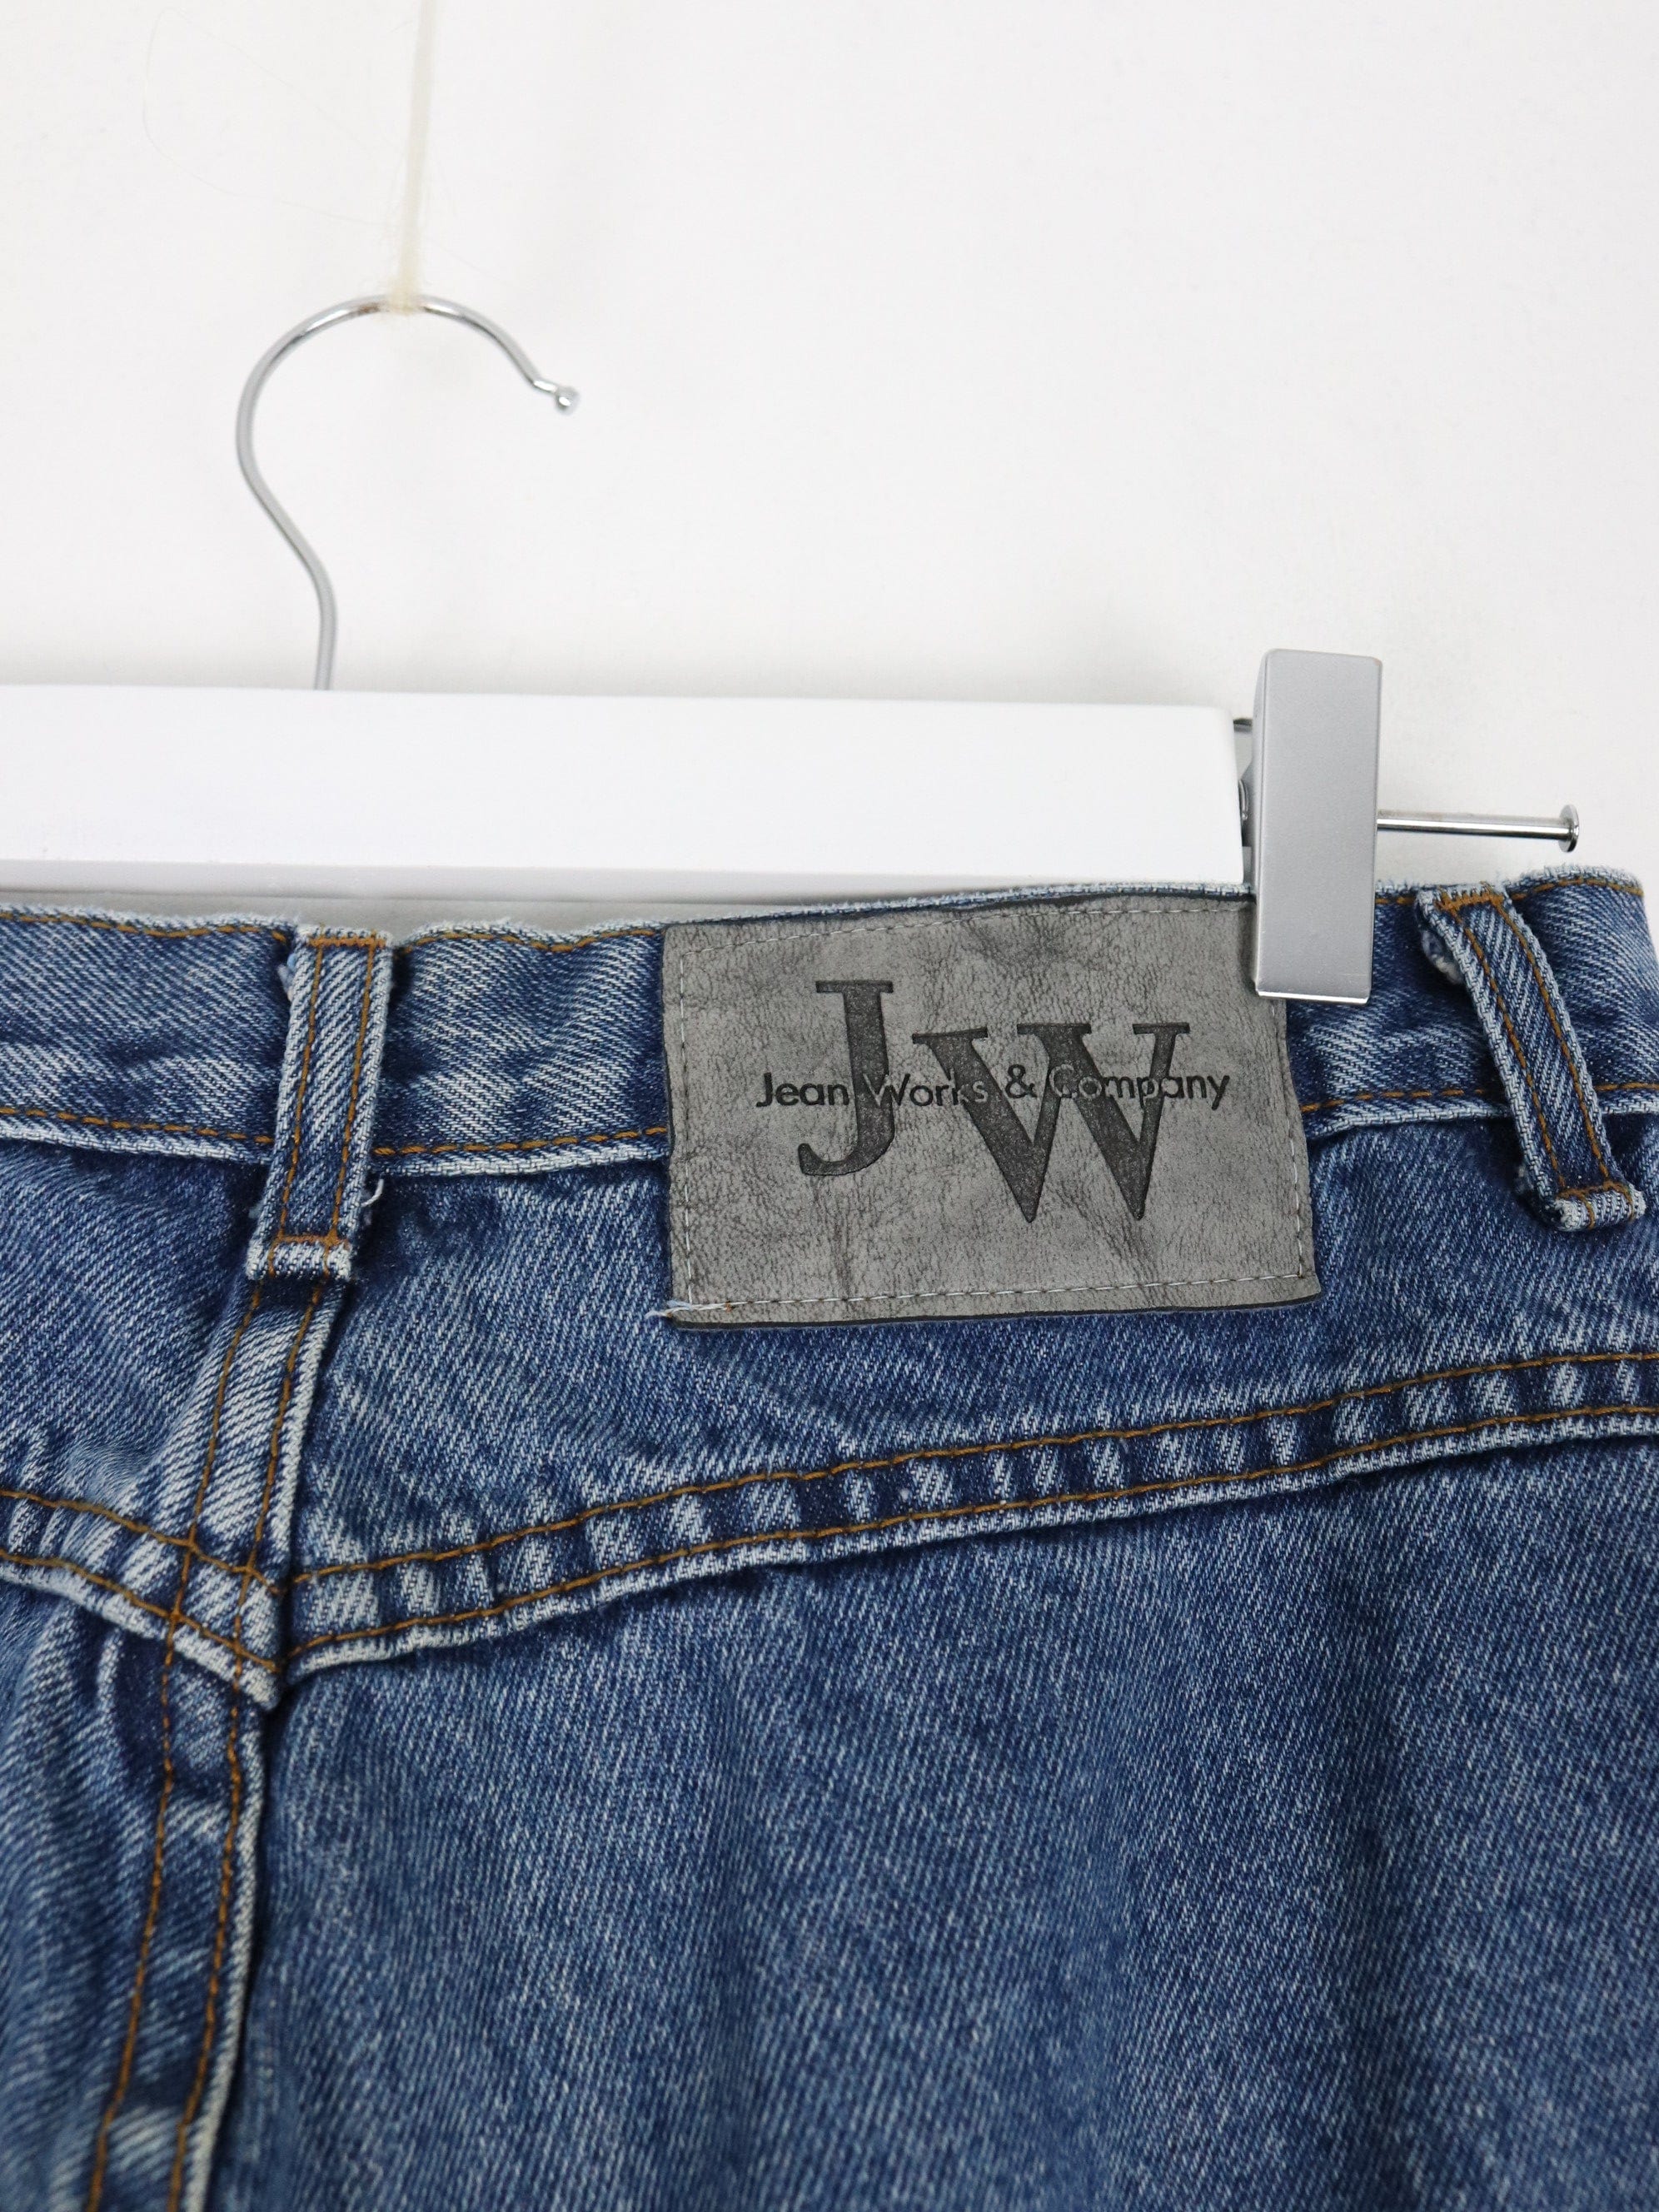 Vintage Lee Pants Womens 12 Blue High Waisted Denim Jeans 28 x 30